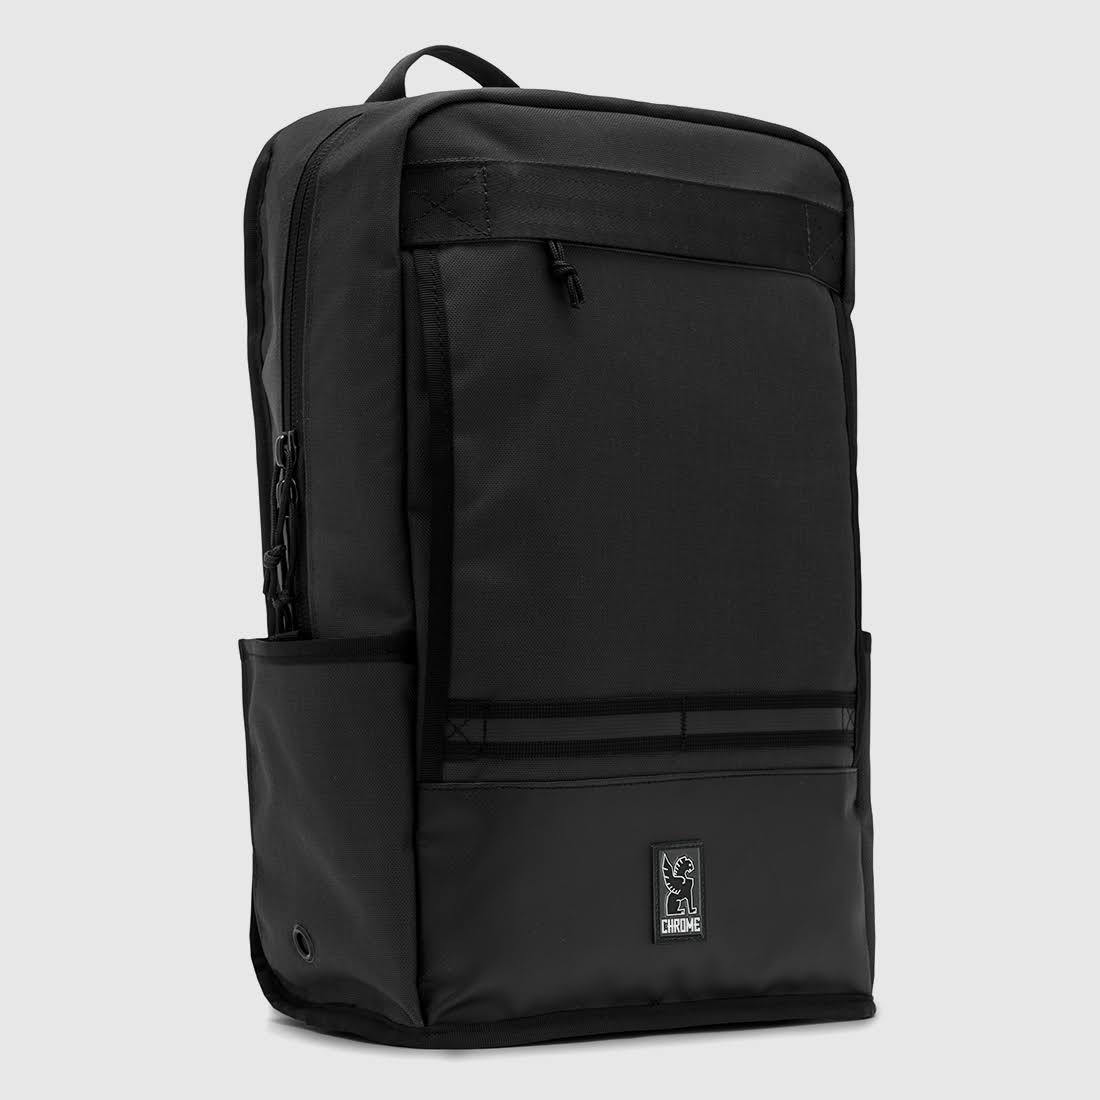 Chrome Hondo Backpack - All Black - Wellnestcares